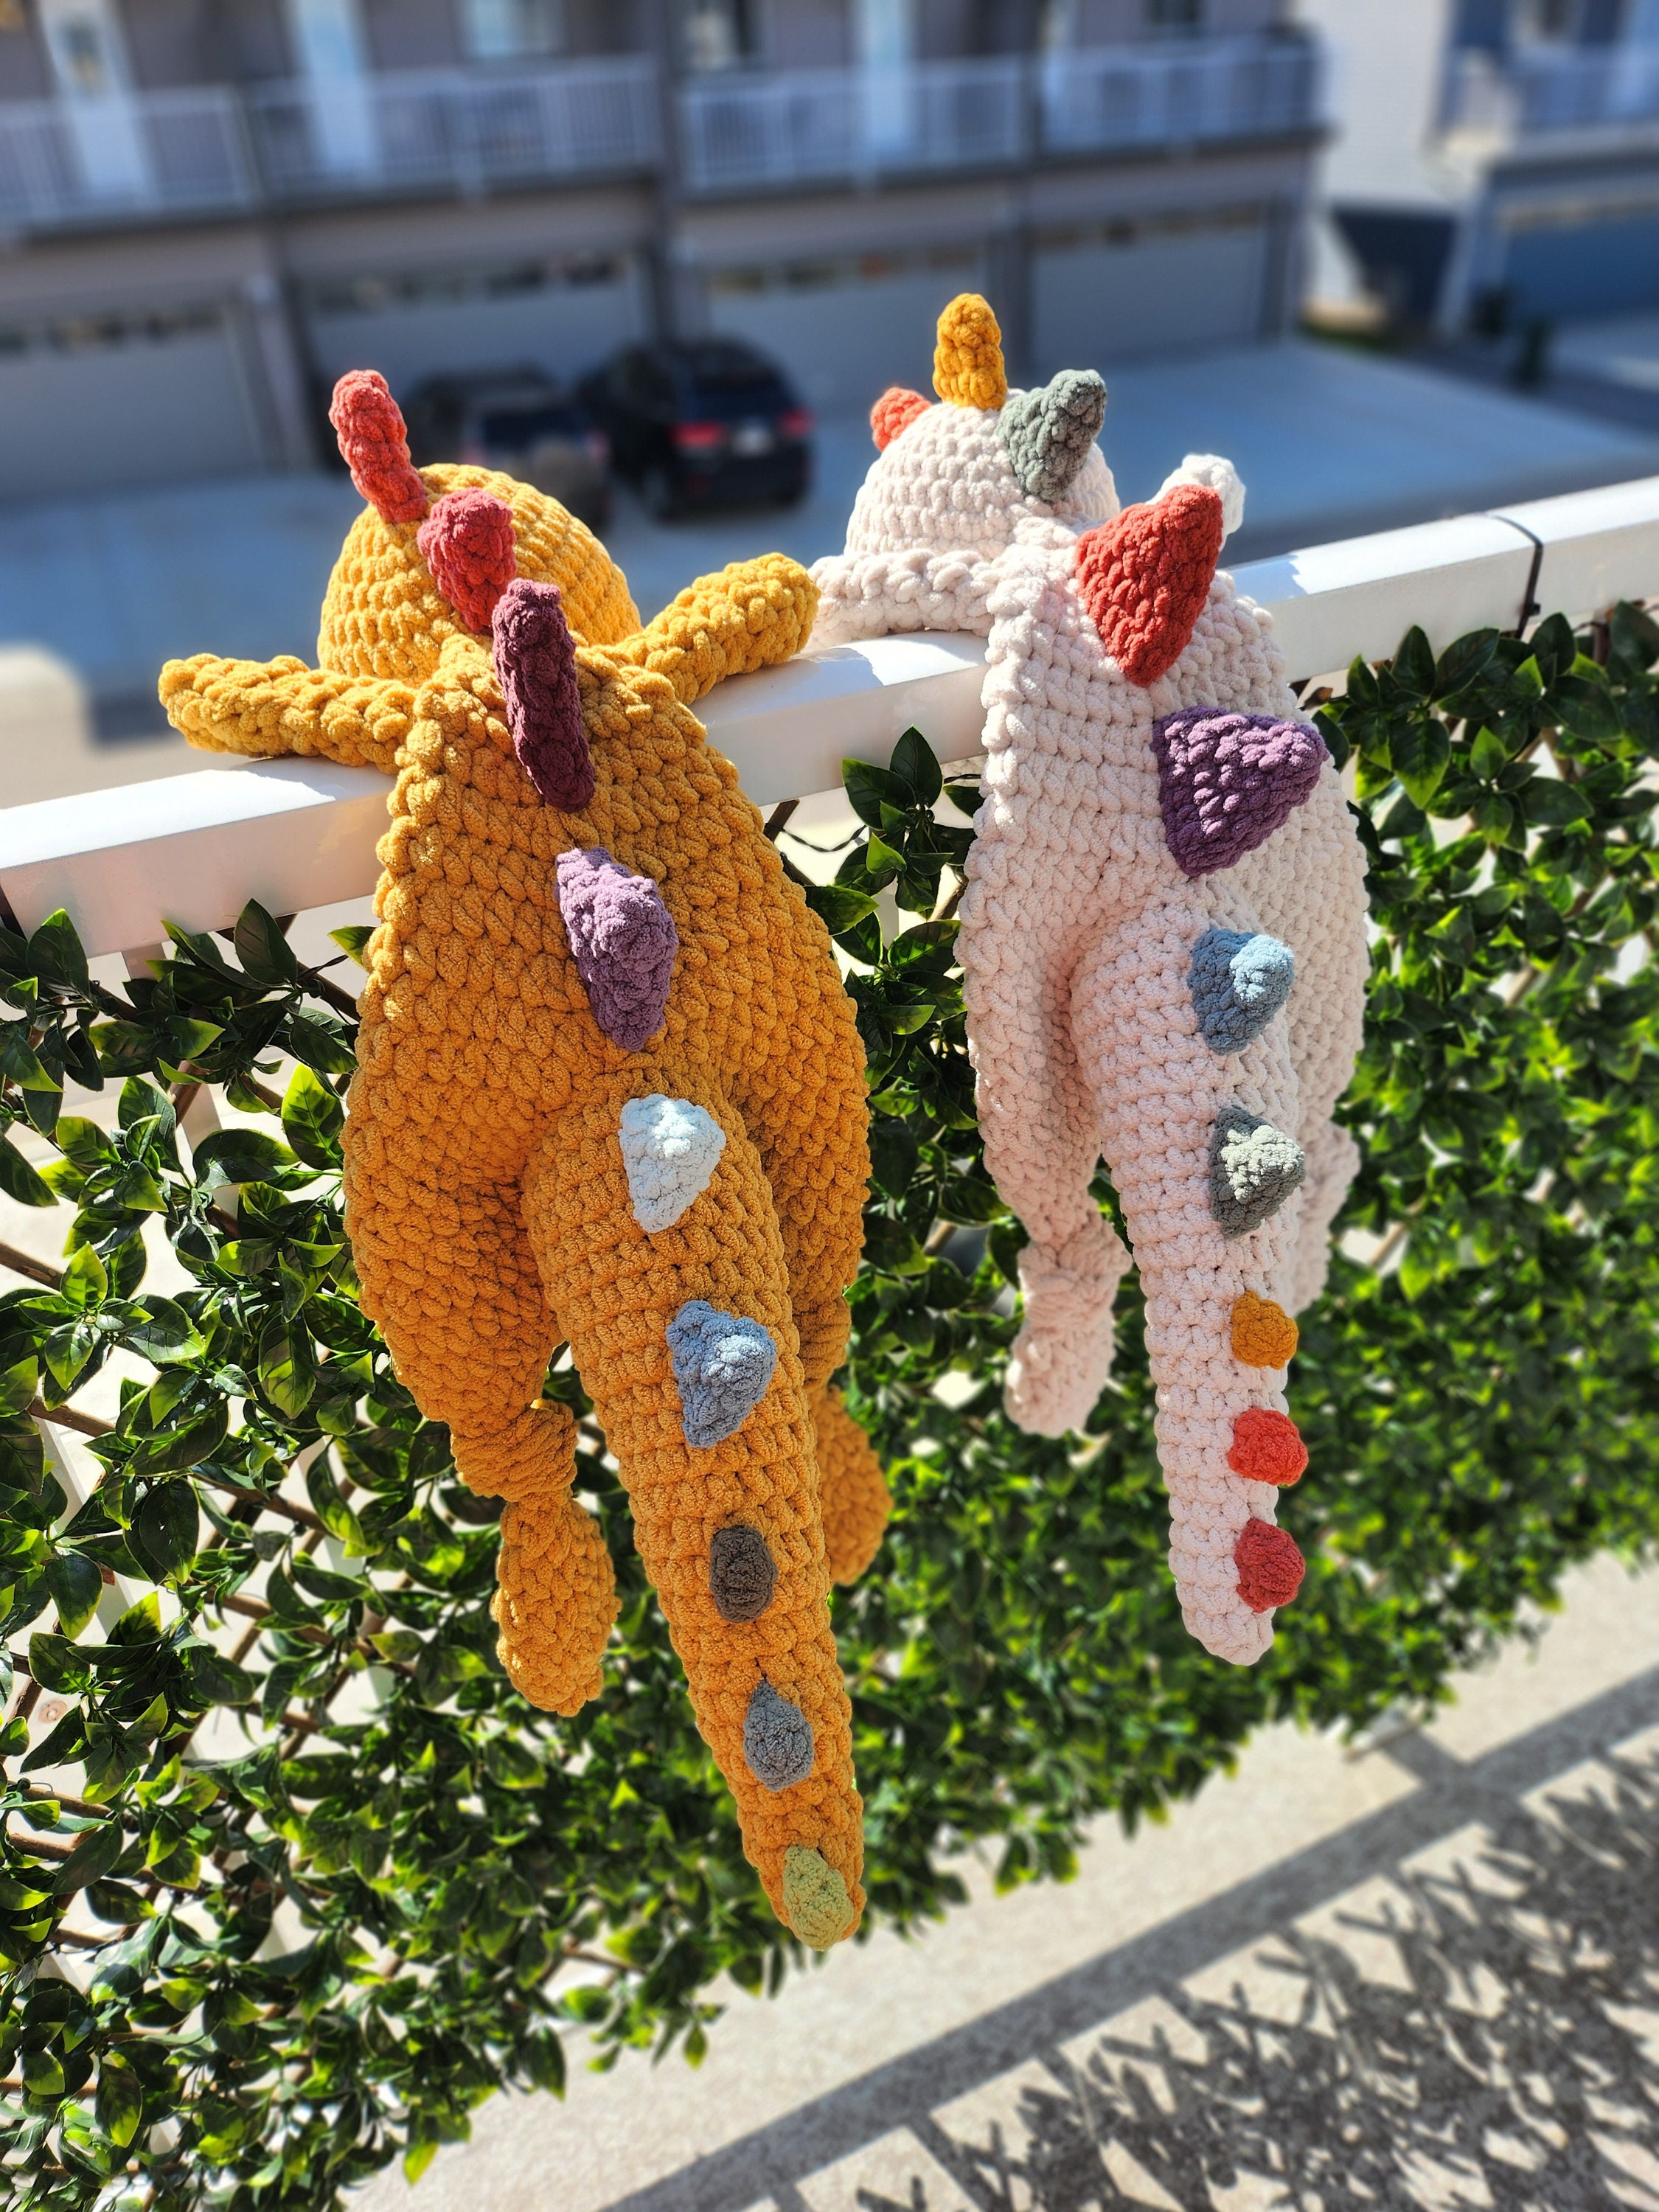 Crochet Plushie Mystery Bag Stuffed Kawaii Animal, Aesthetic, Gacha,  Trendy, Cute Plushies, Lucky Box, Random Surprise Pack, Tik Tok Viral 